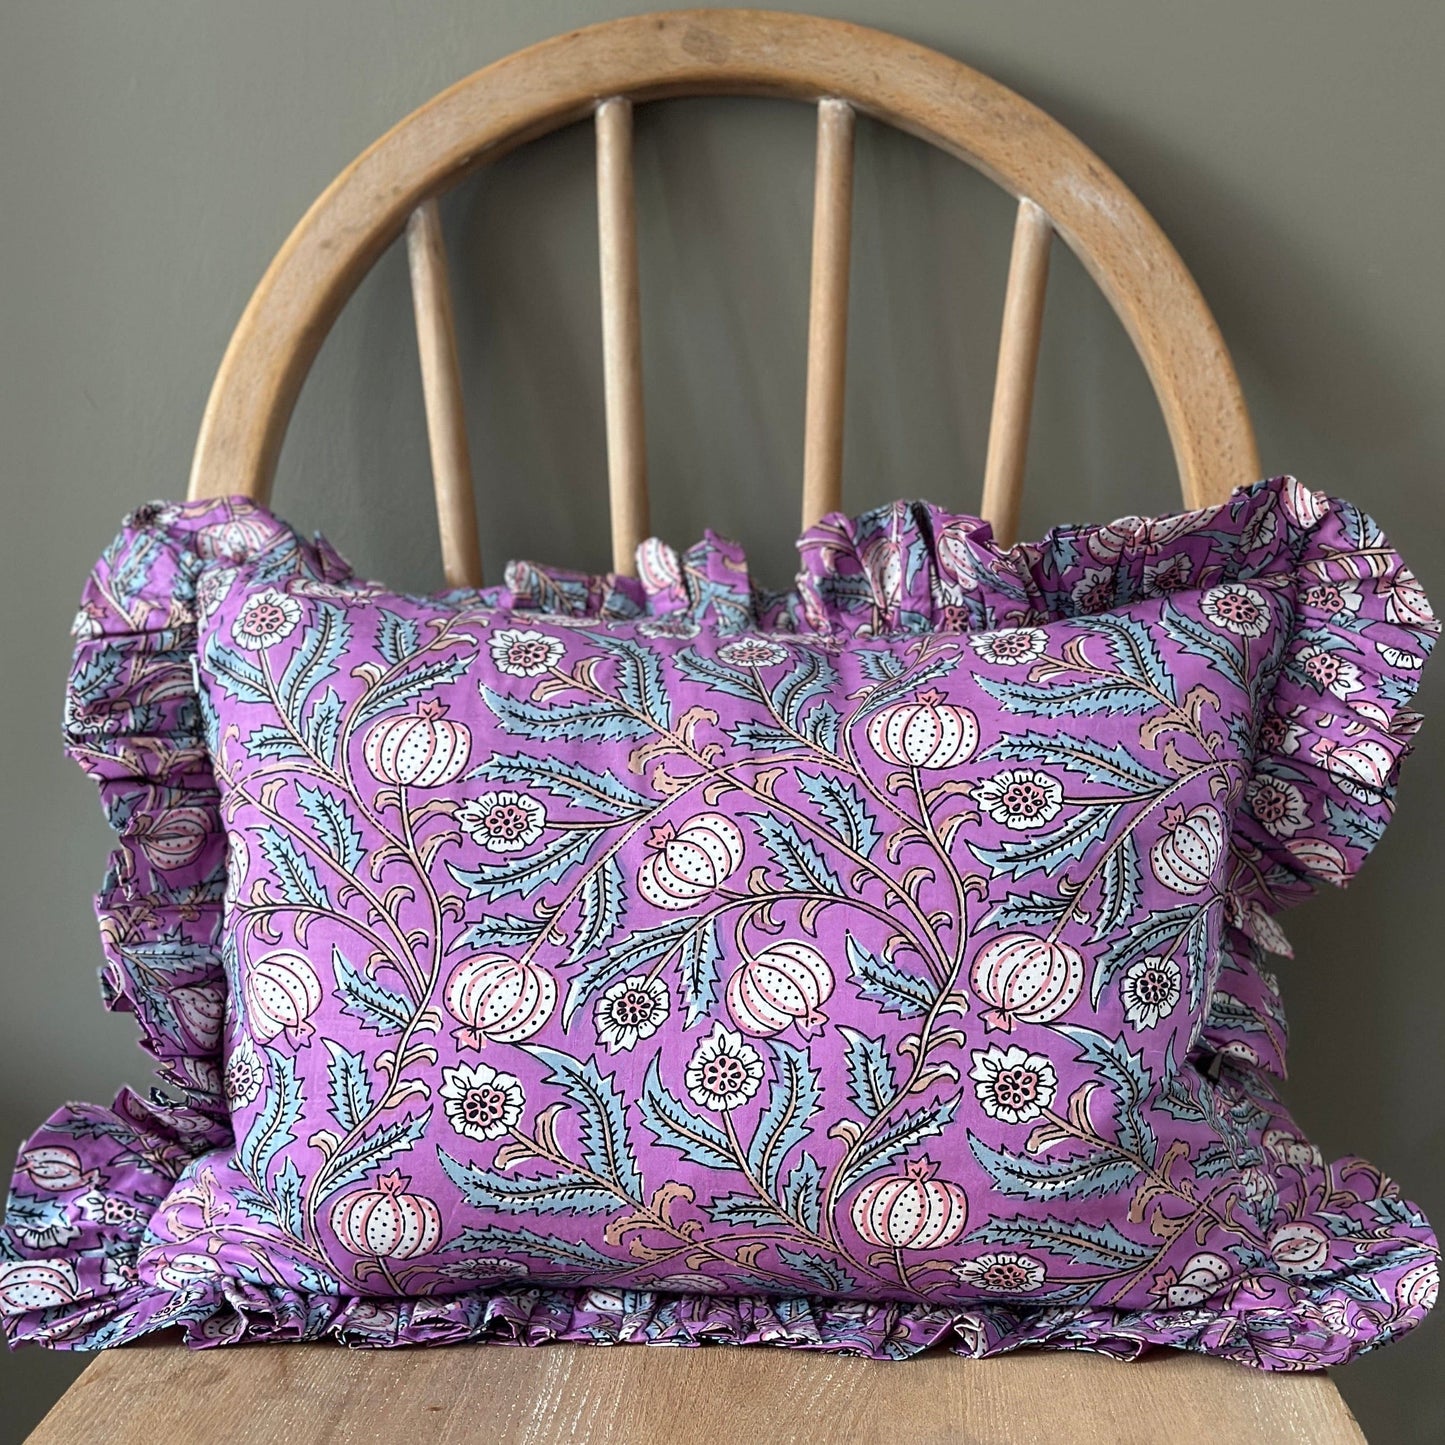 Cushions Small Ruffle Cushion - Pomegranate on Lilac 21491